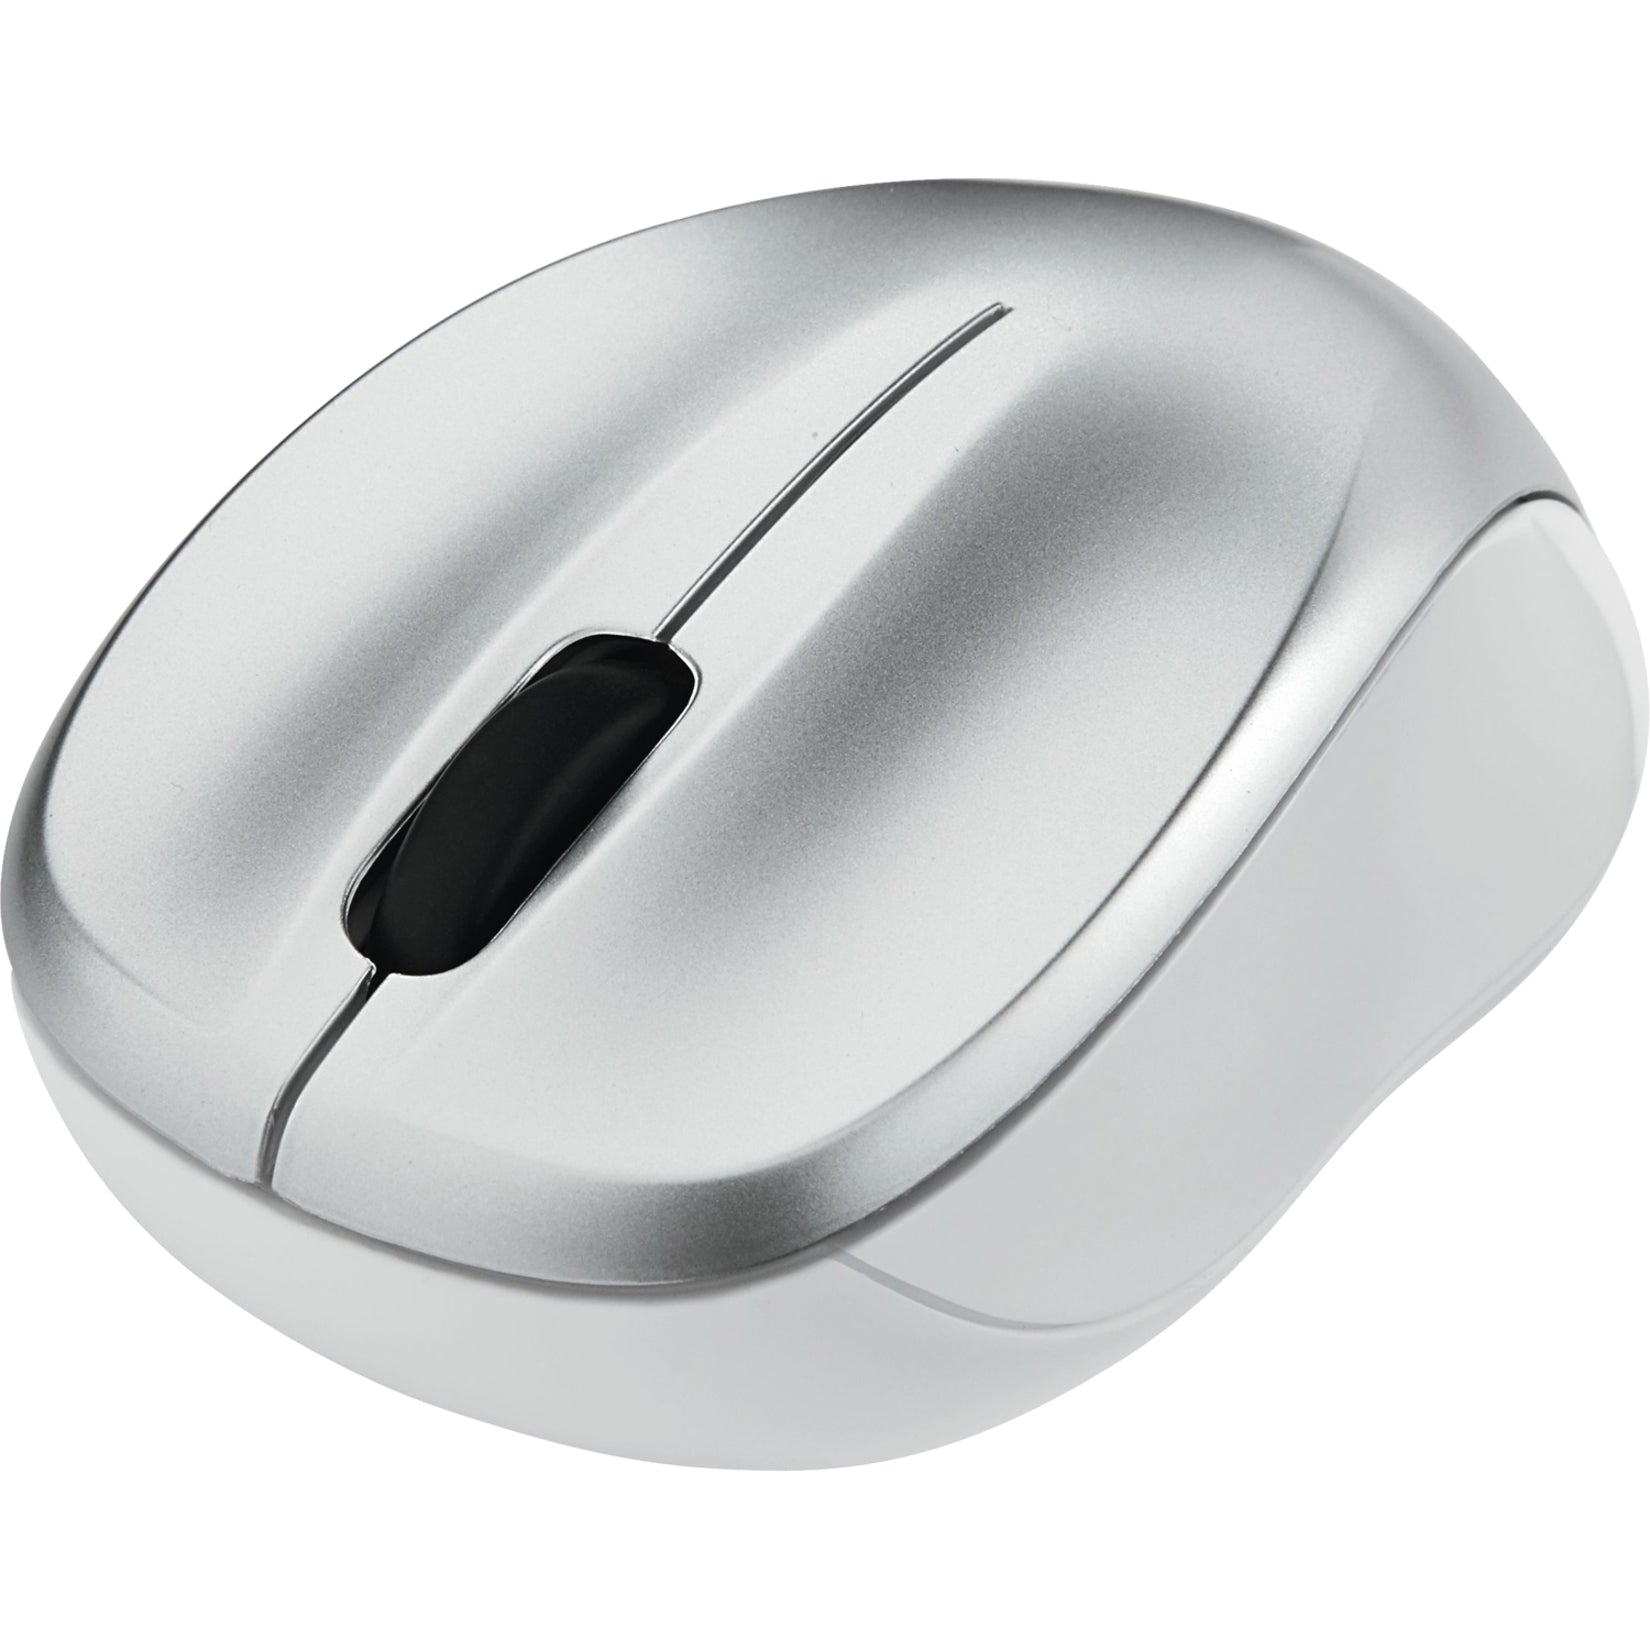 Verbatim 99777 Silent Wireless Blue LED Maus - Silber für PCs & Macs